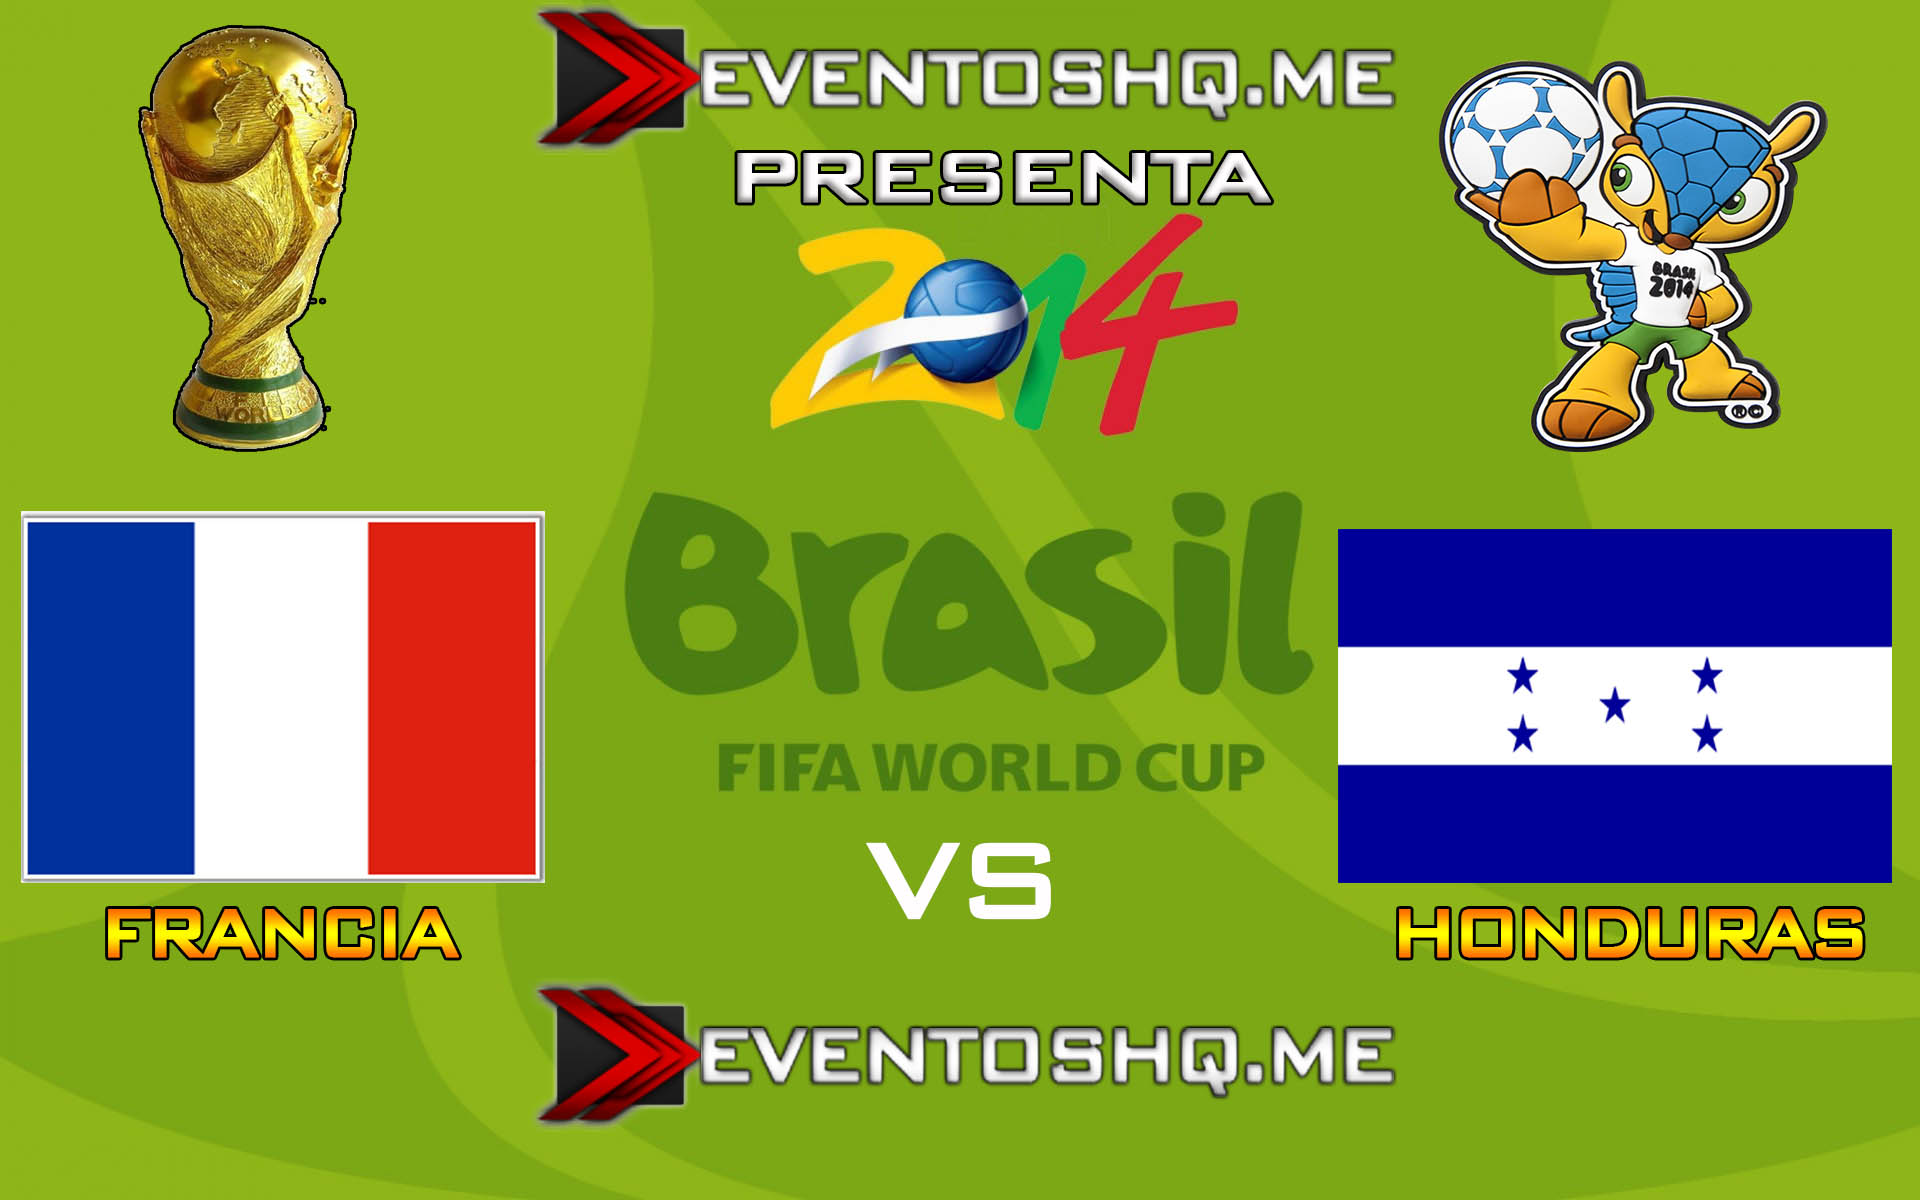 Ver en Vivo Francia vs Honduras Mundial Brasil 2014 www.eventoshq.me